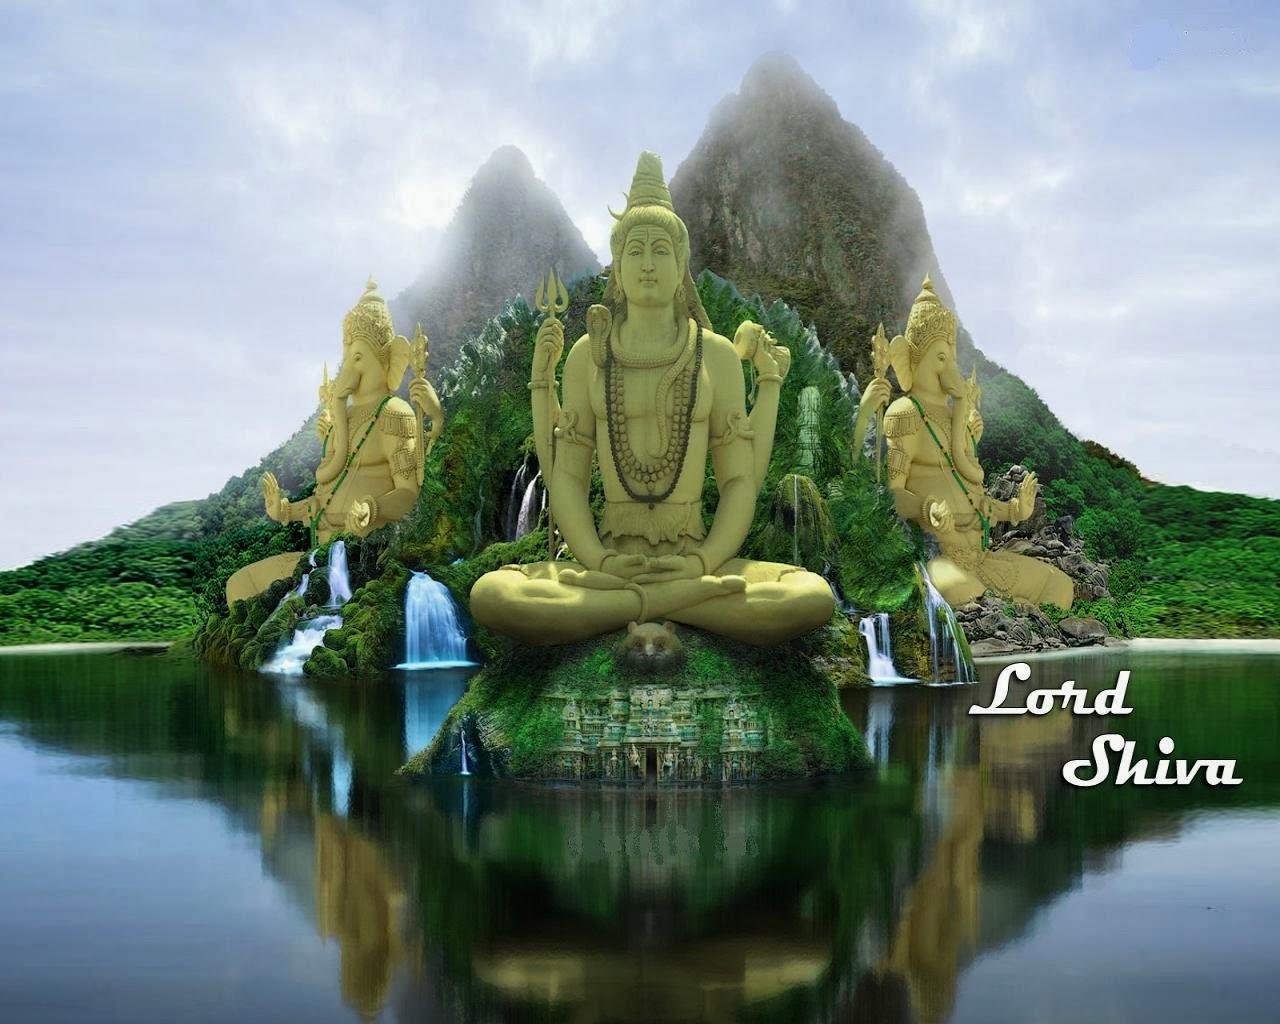 Free download Mahashivratri Wallpapers HD Shiv Bhagwan Desktop ...